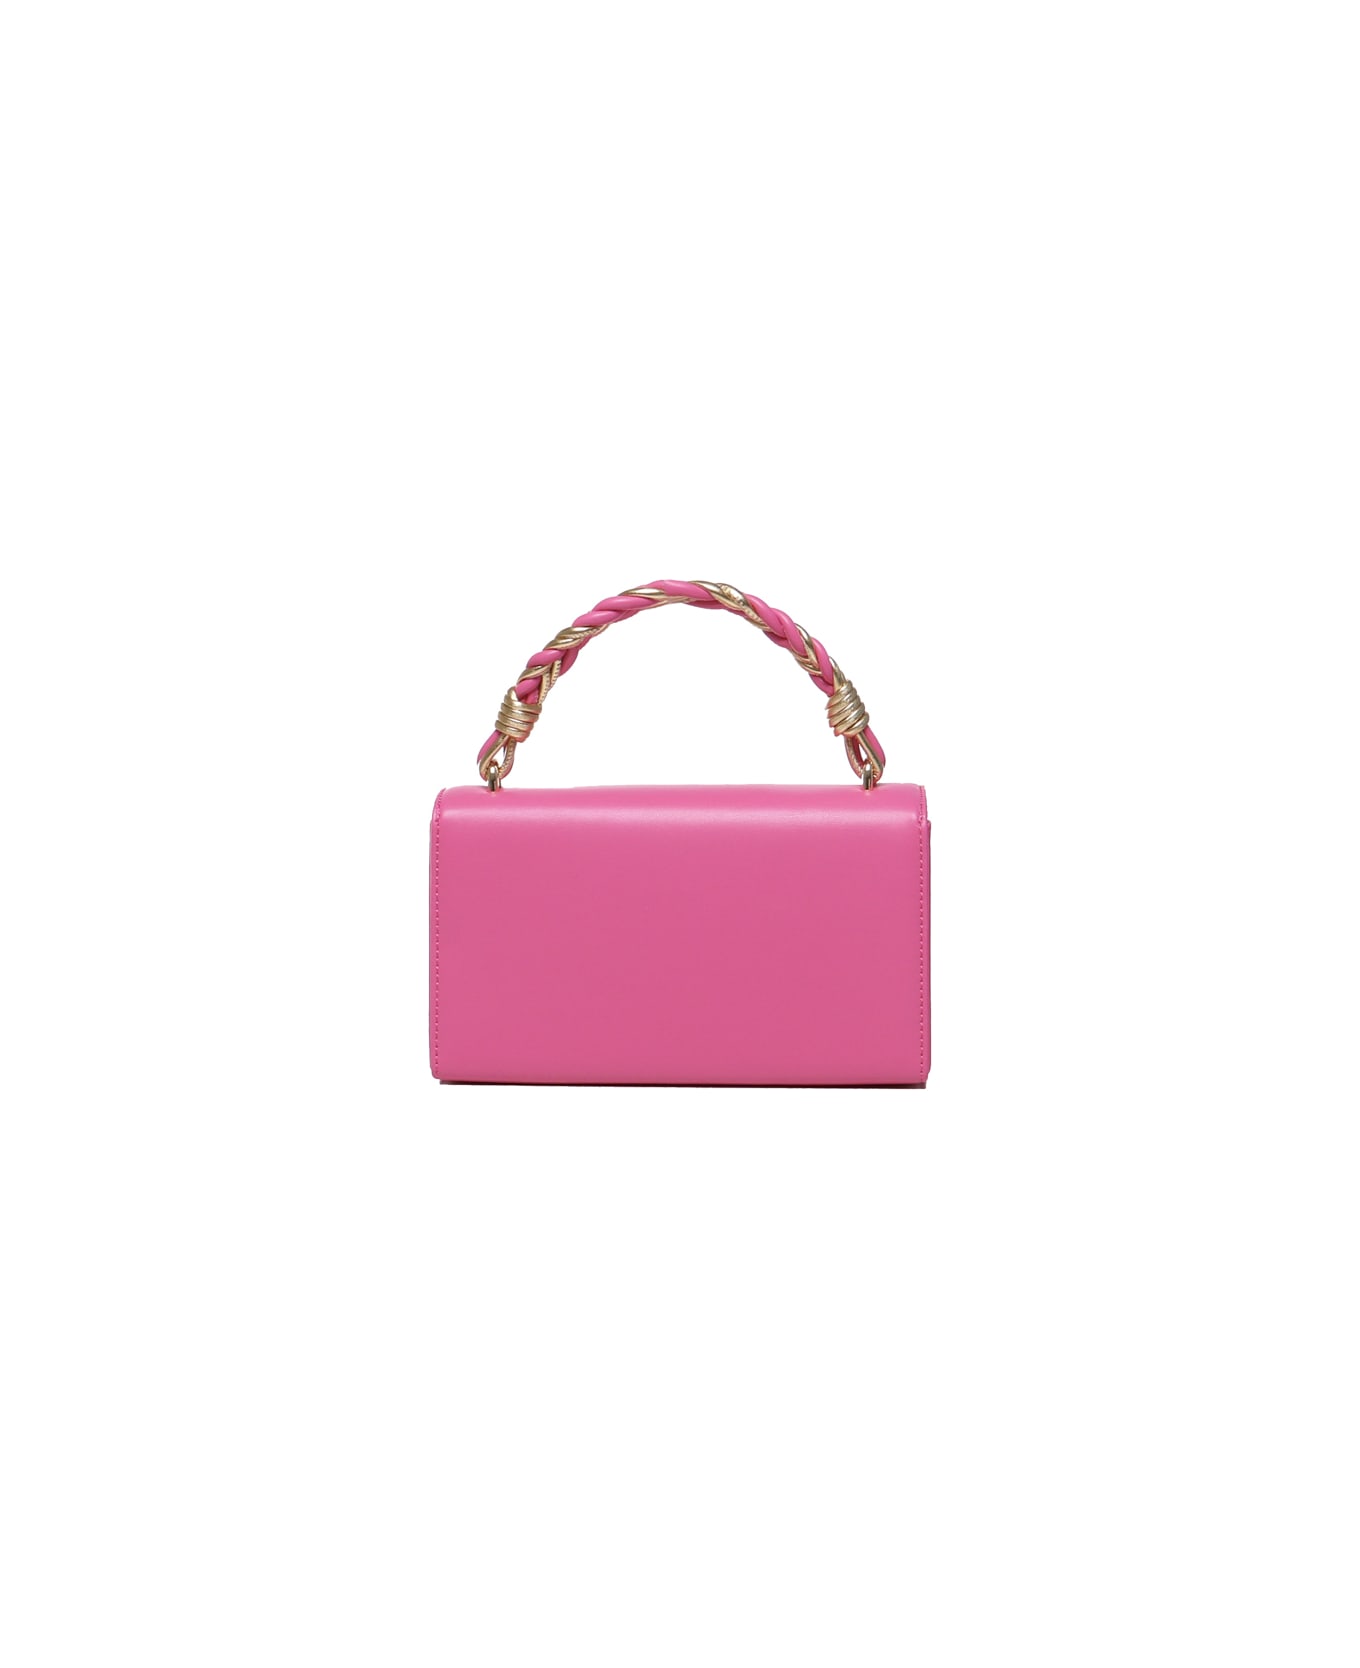 Love Moschino Handheld Handbag With Chain Shoulder Strap - Fuxia